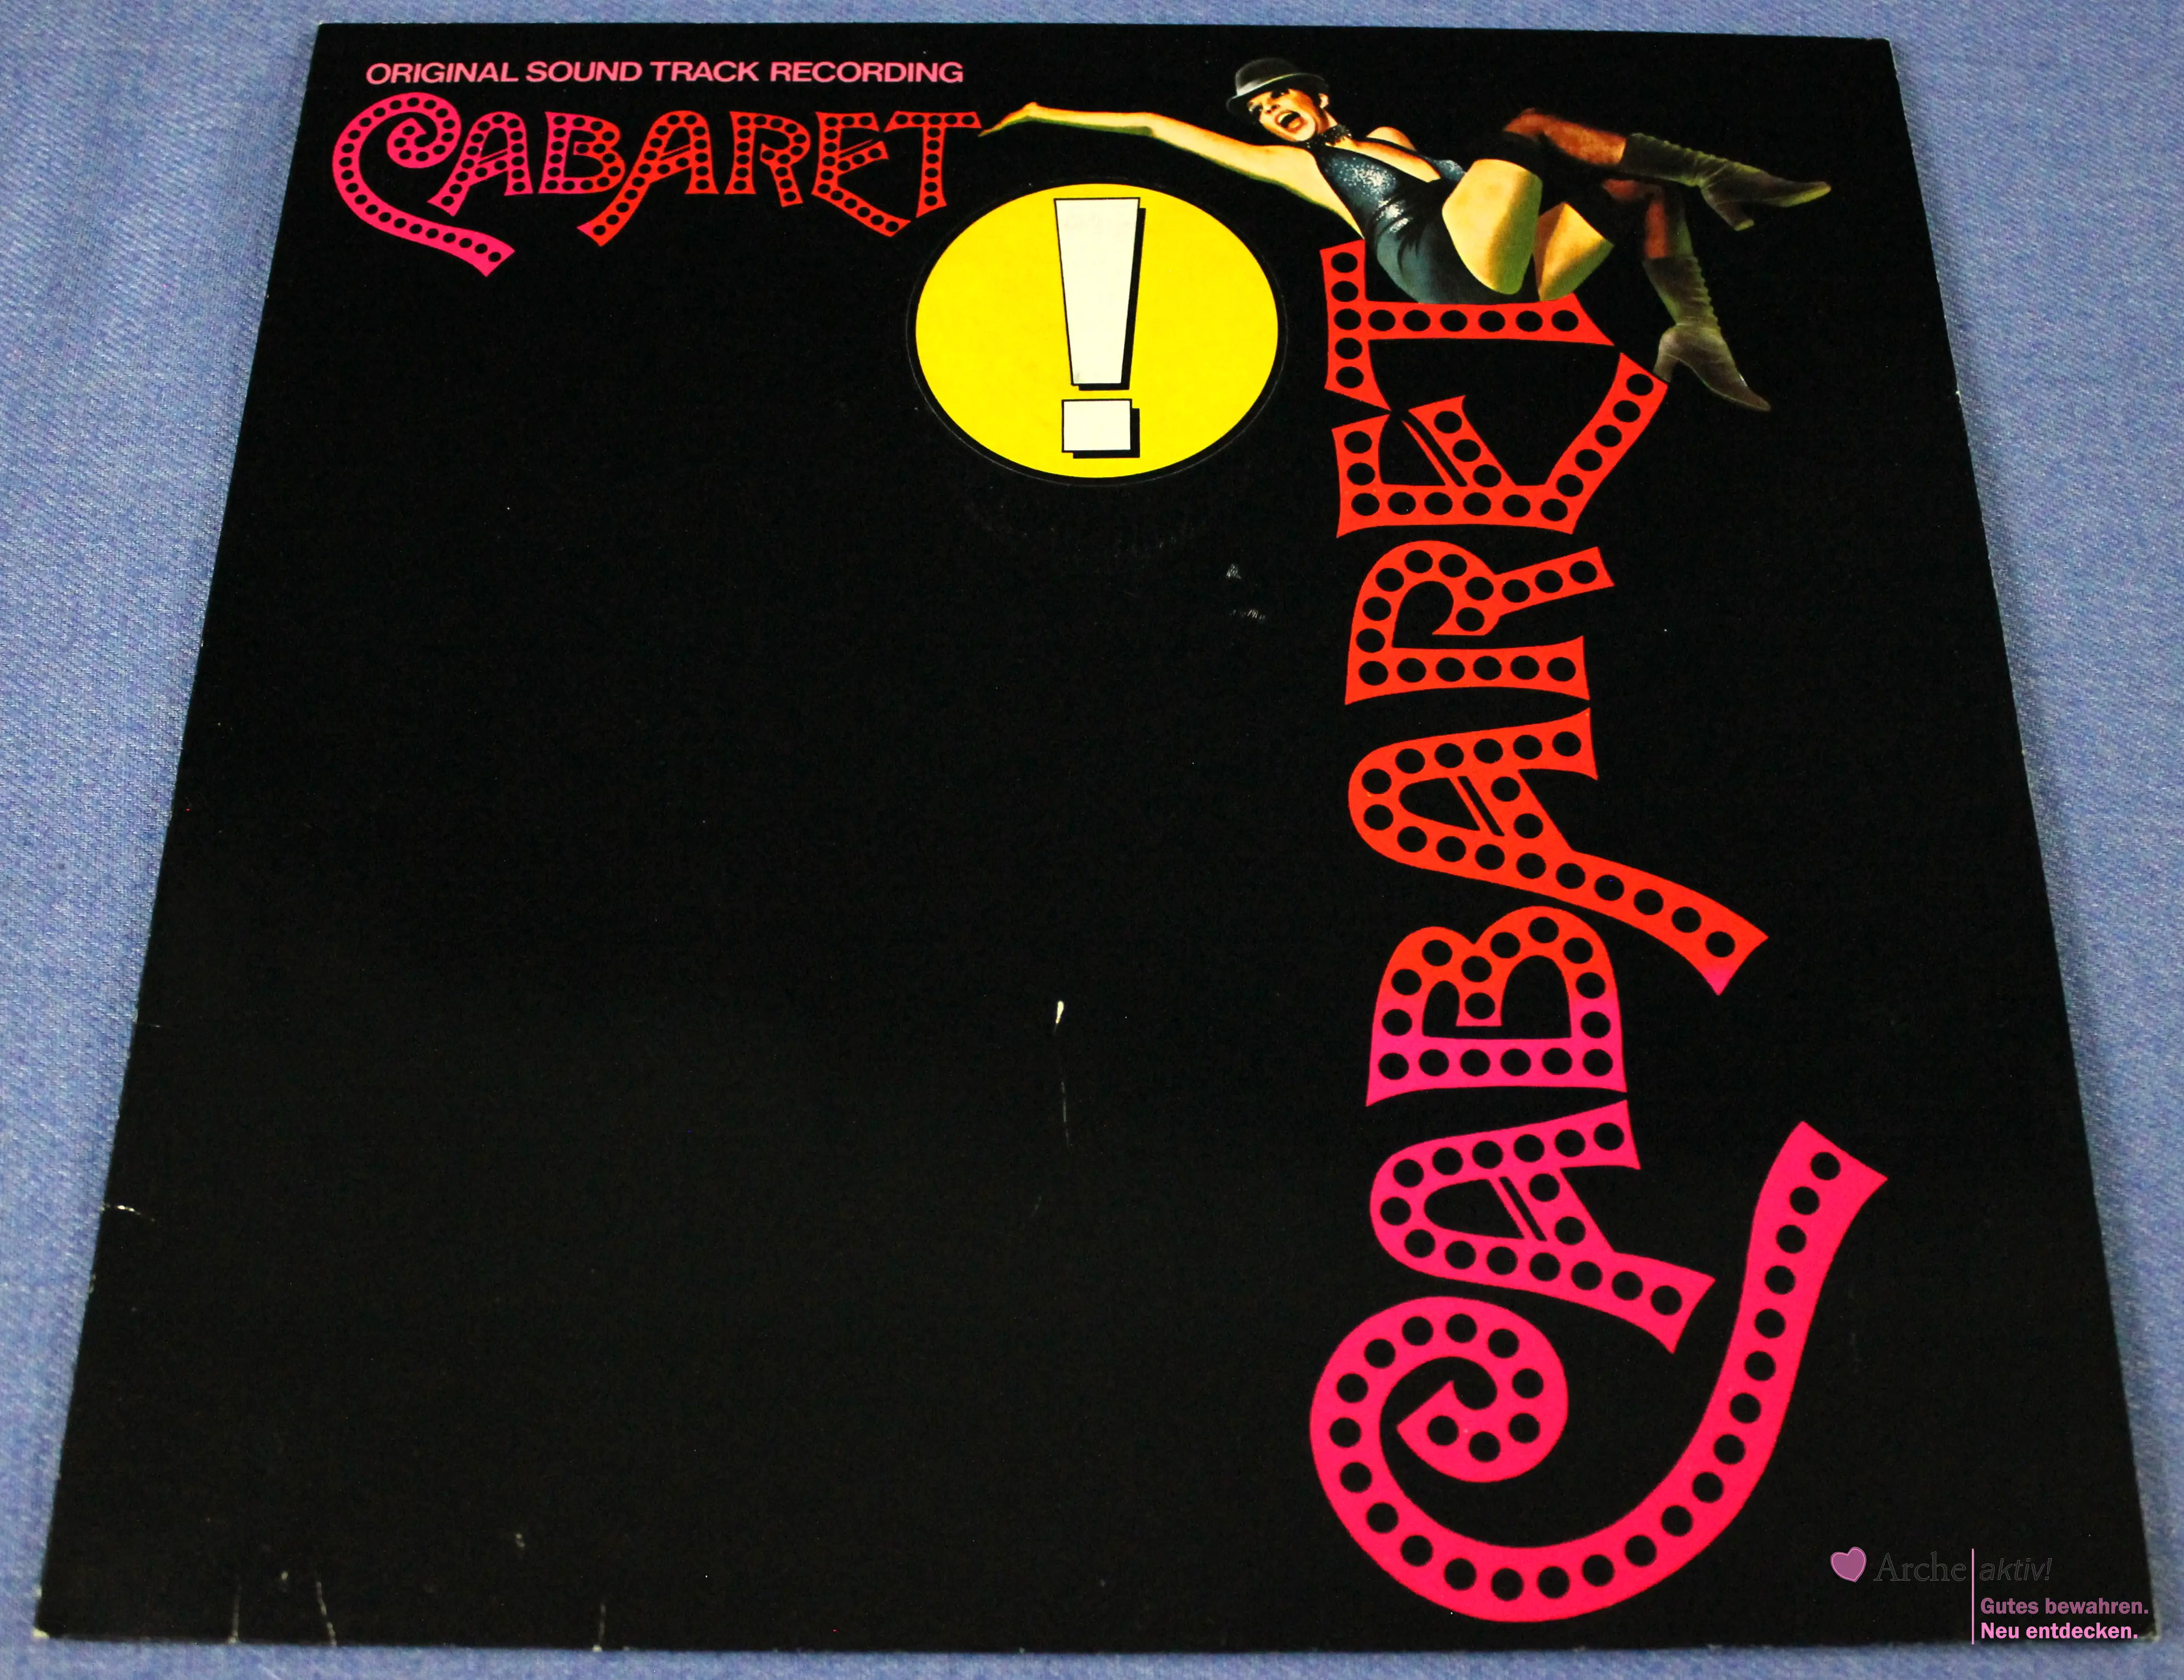 Cabaret - Original Sound Track Recording (Vinyl) LP, gebraucht